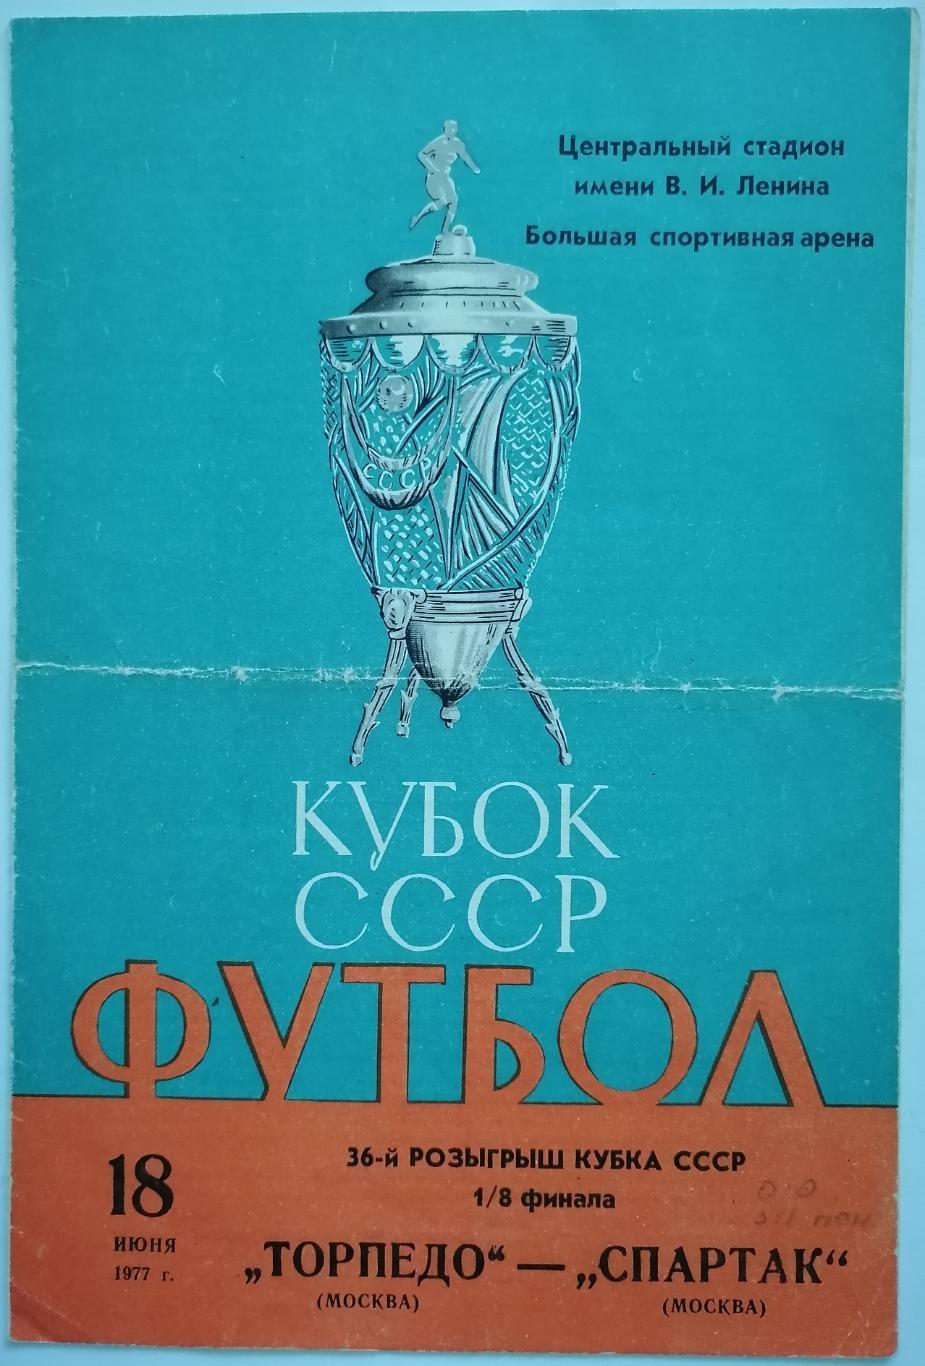 ТОРПЕДО МОСКВА - СПАРТАК МОСКВА - 1977 официальная программа КУБОК